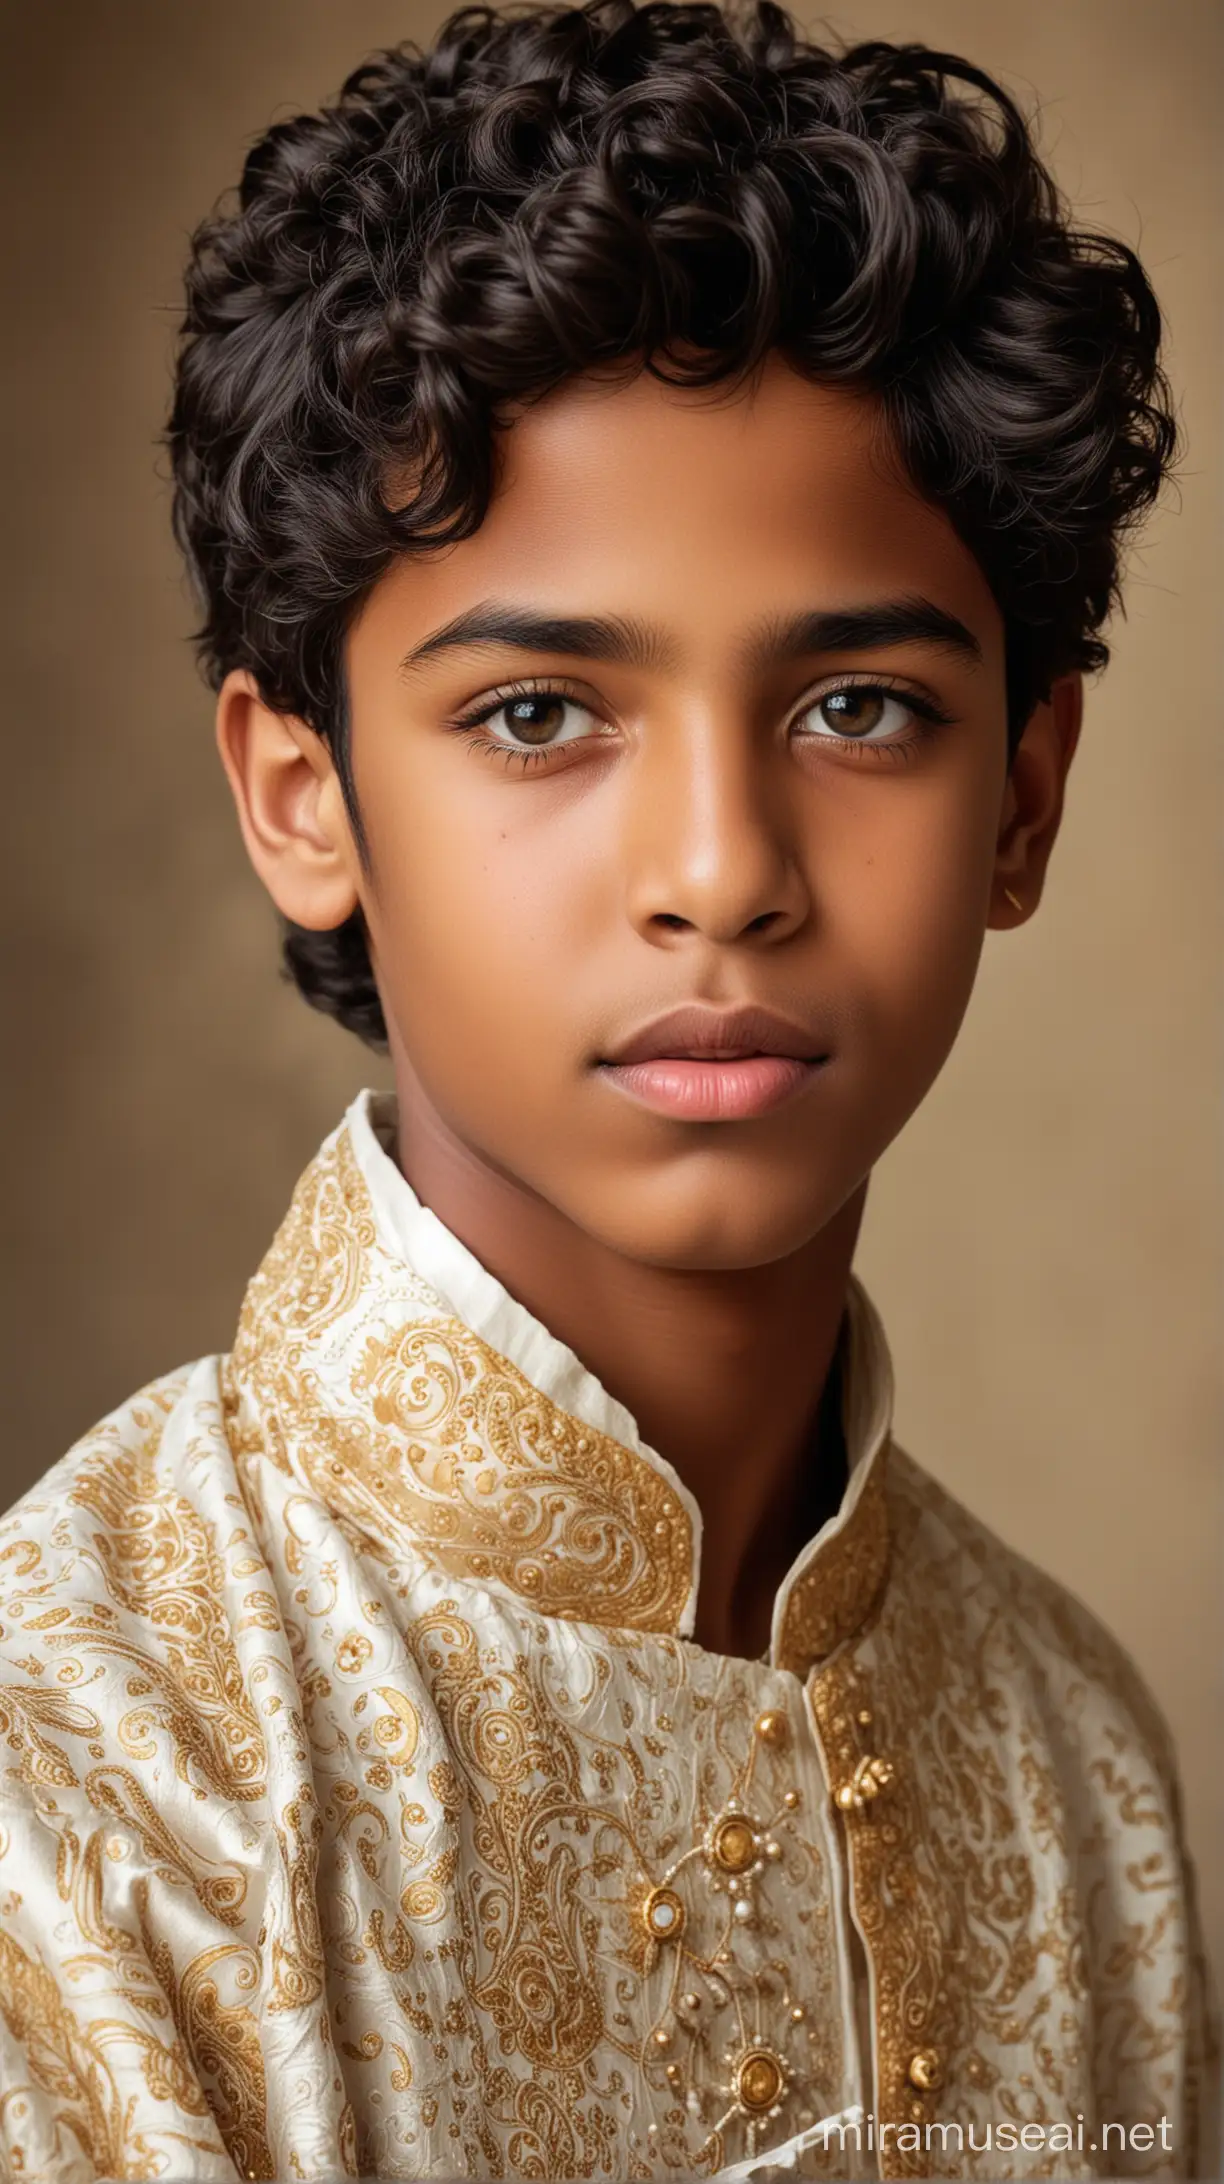 Traditional Sherwani and Dhoti Portrait of a 12YearOld Black Boy